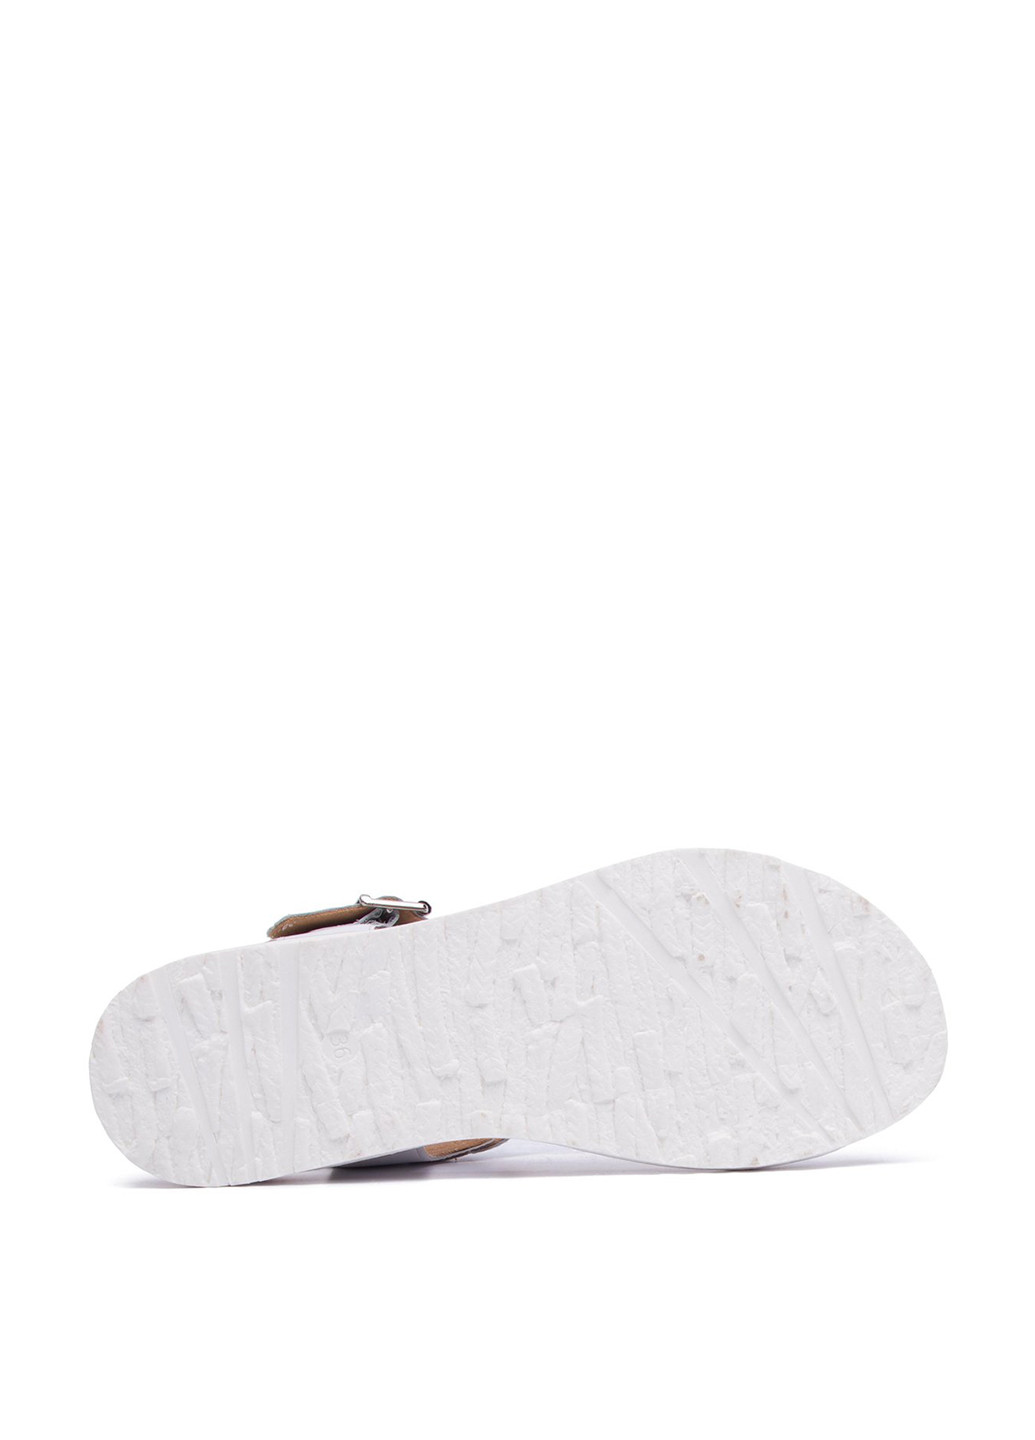 Кэжуал сандалі arc-marina-14 Lasocki на ремешке